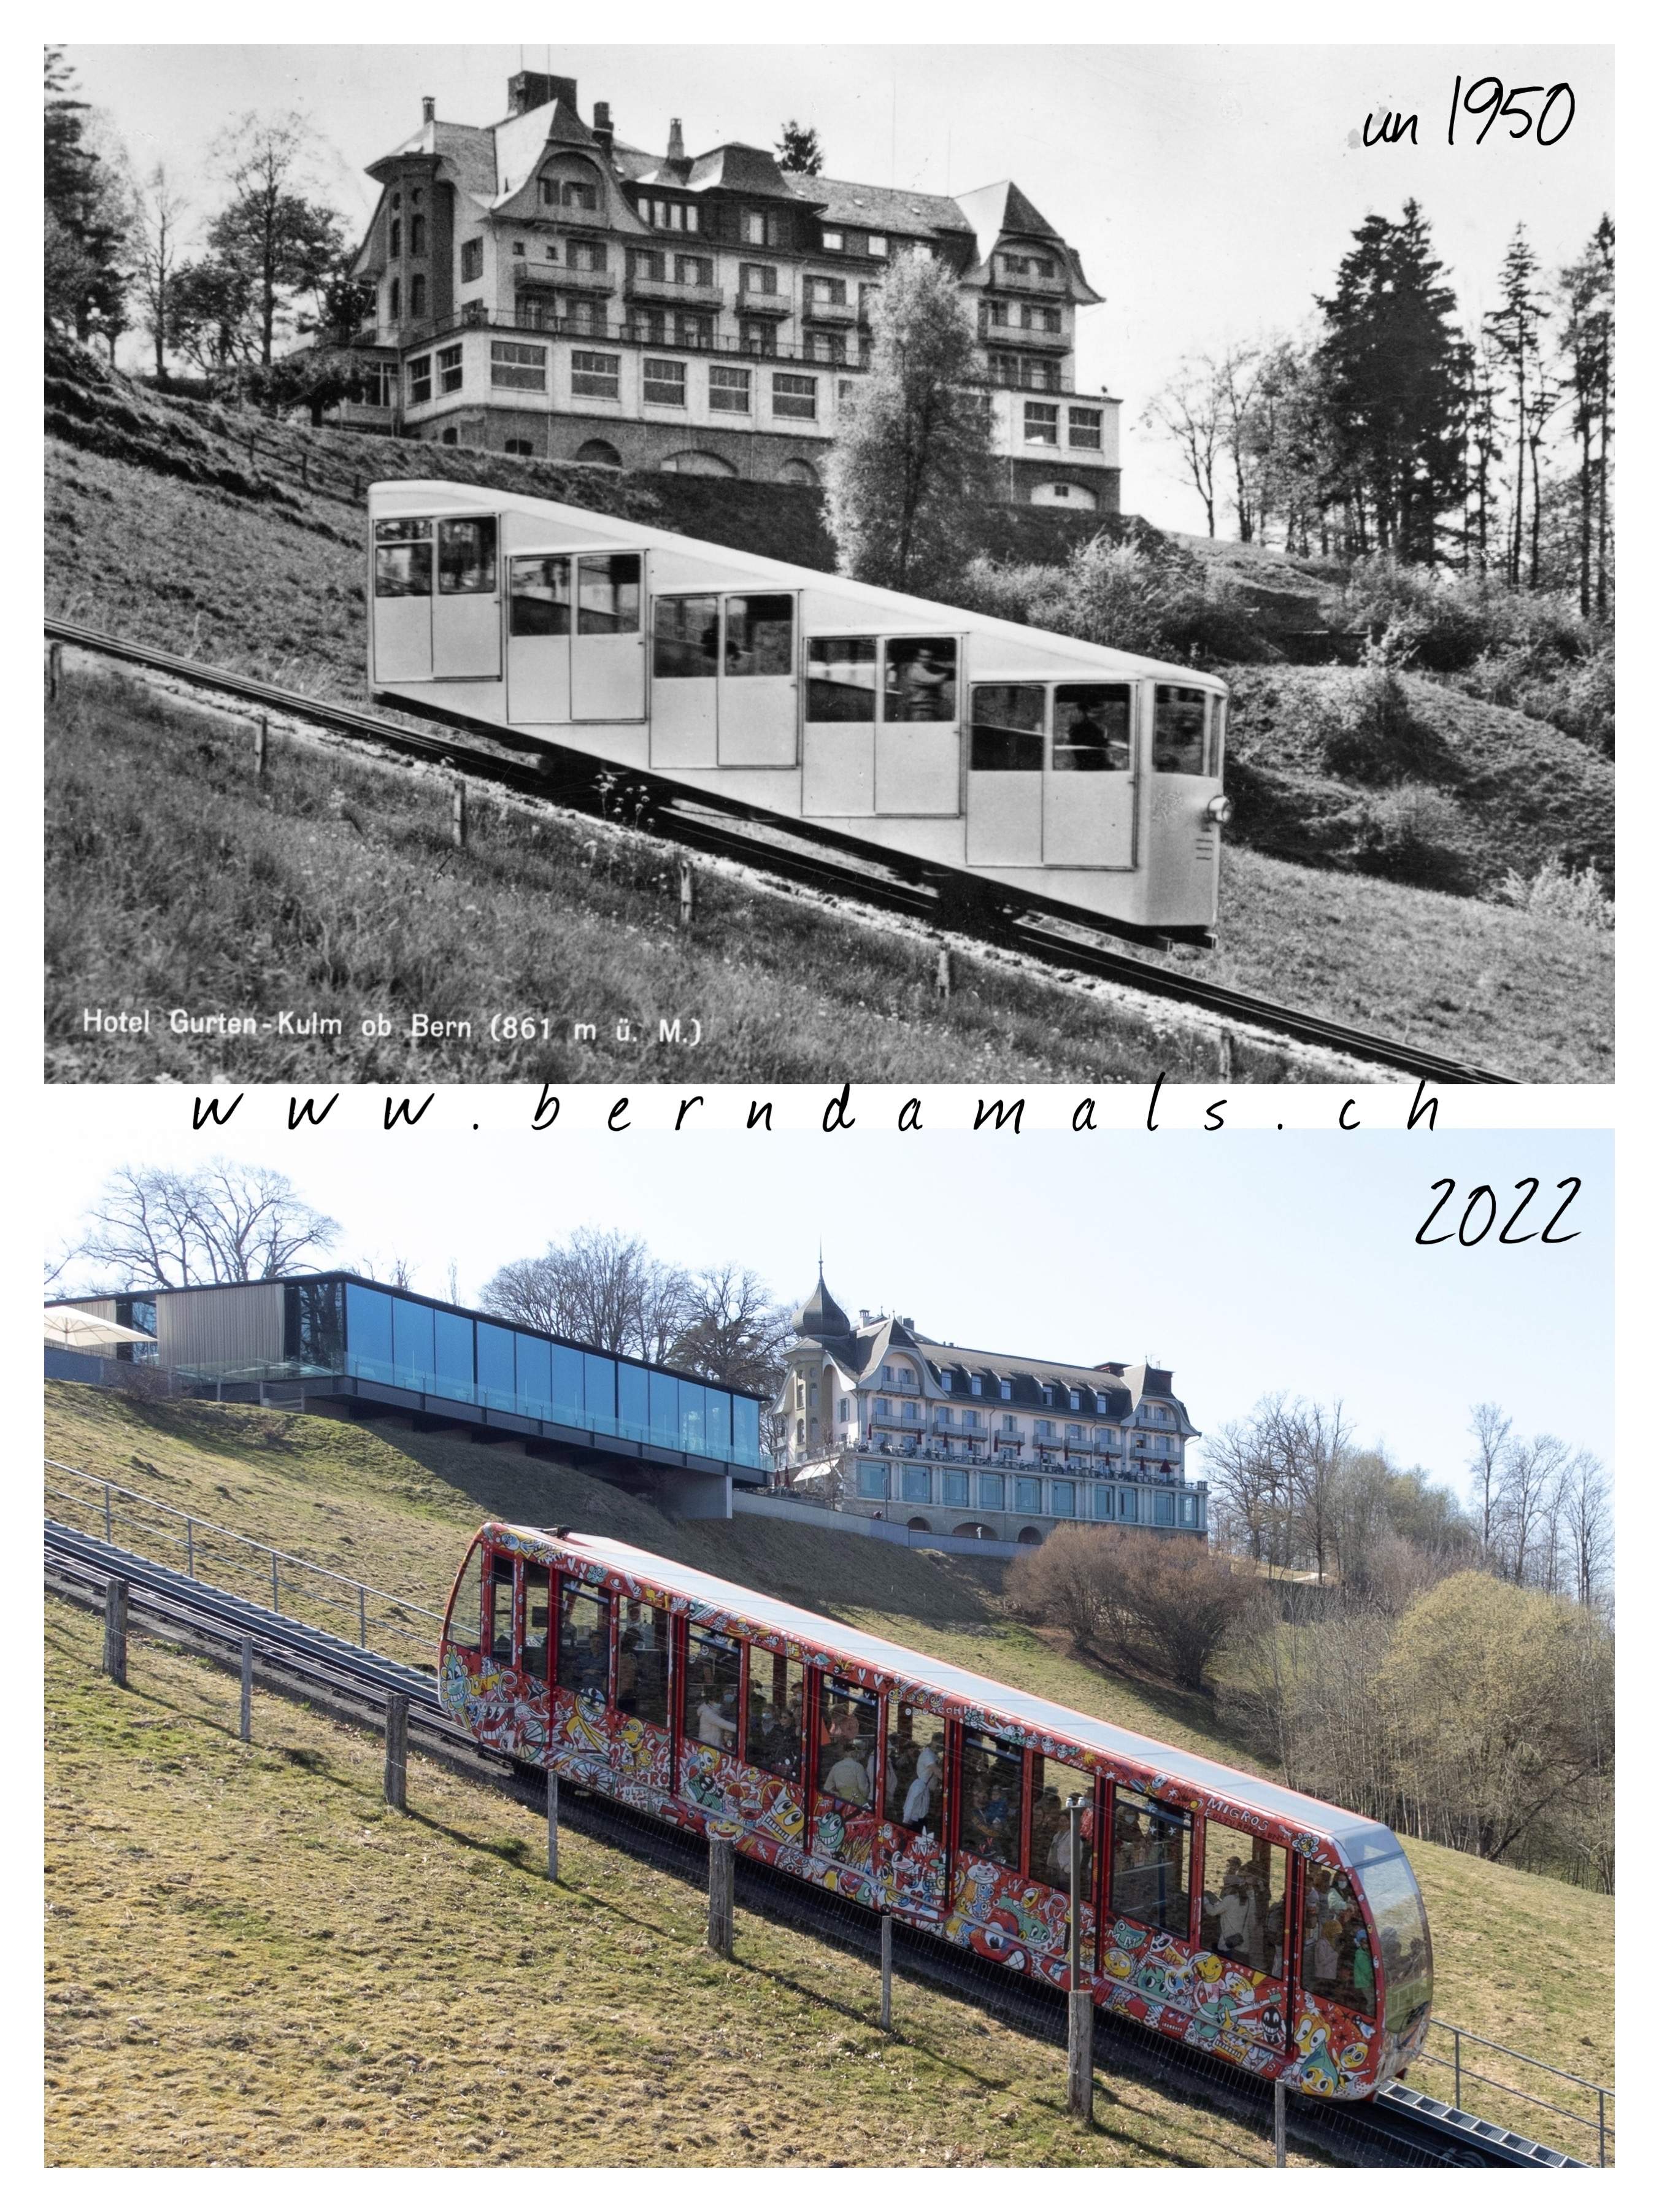 Gurtenbahn um 1950